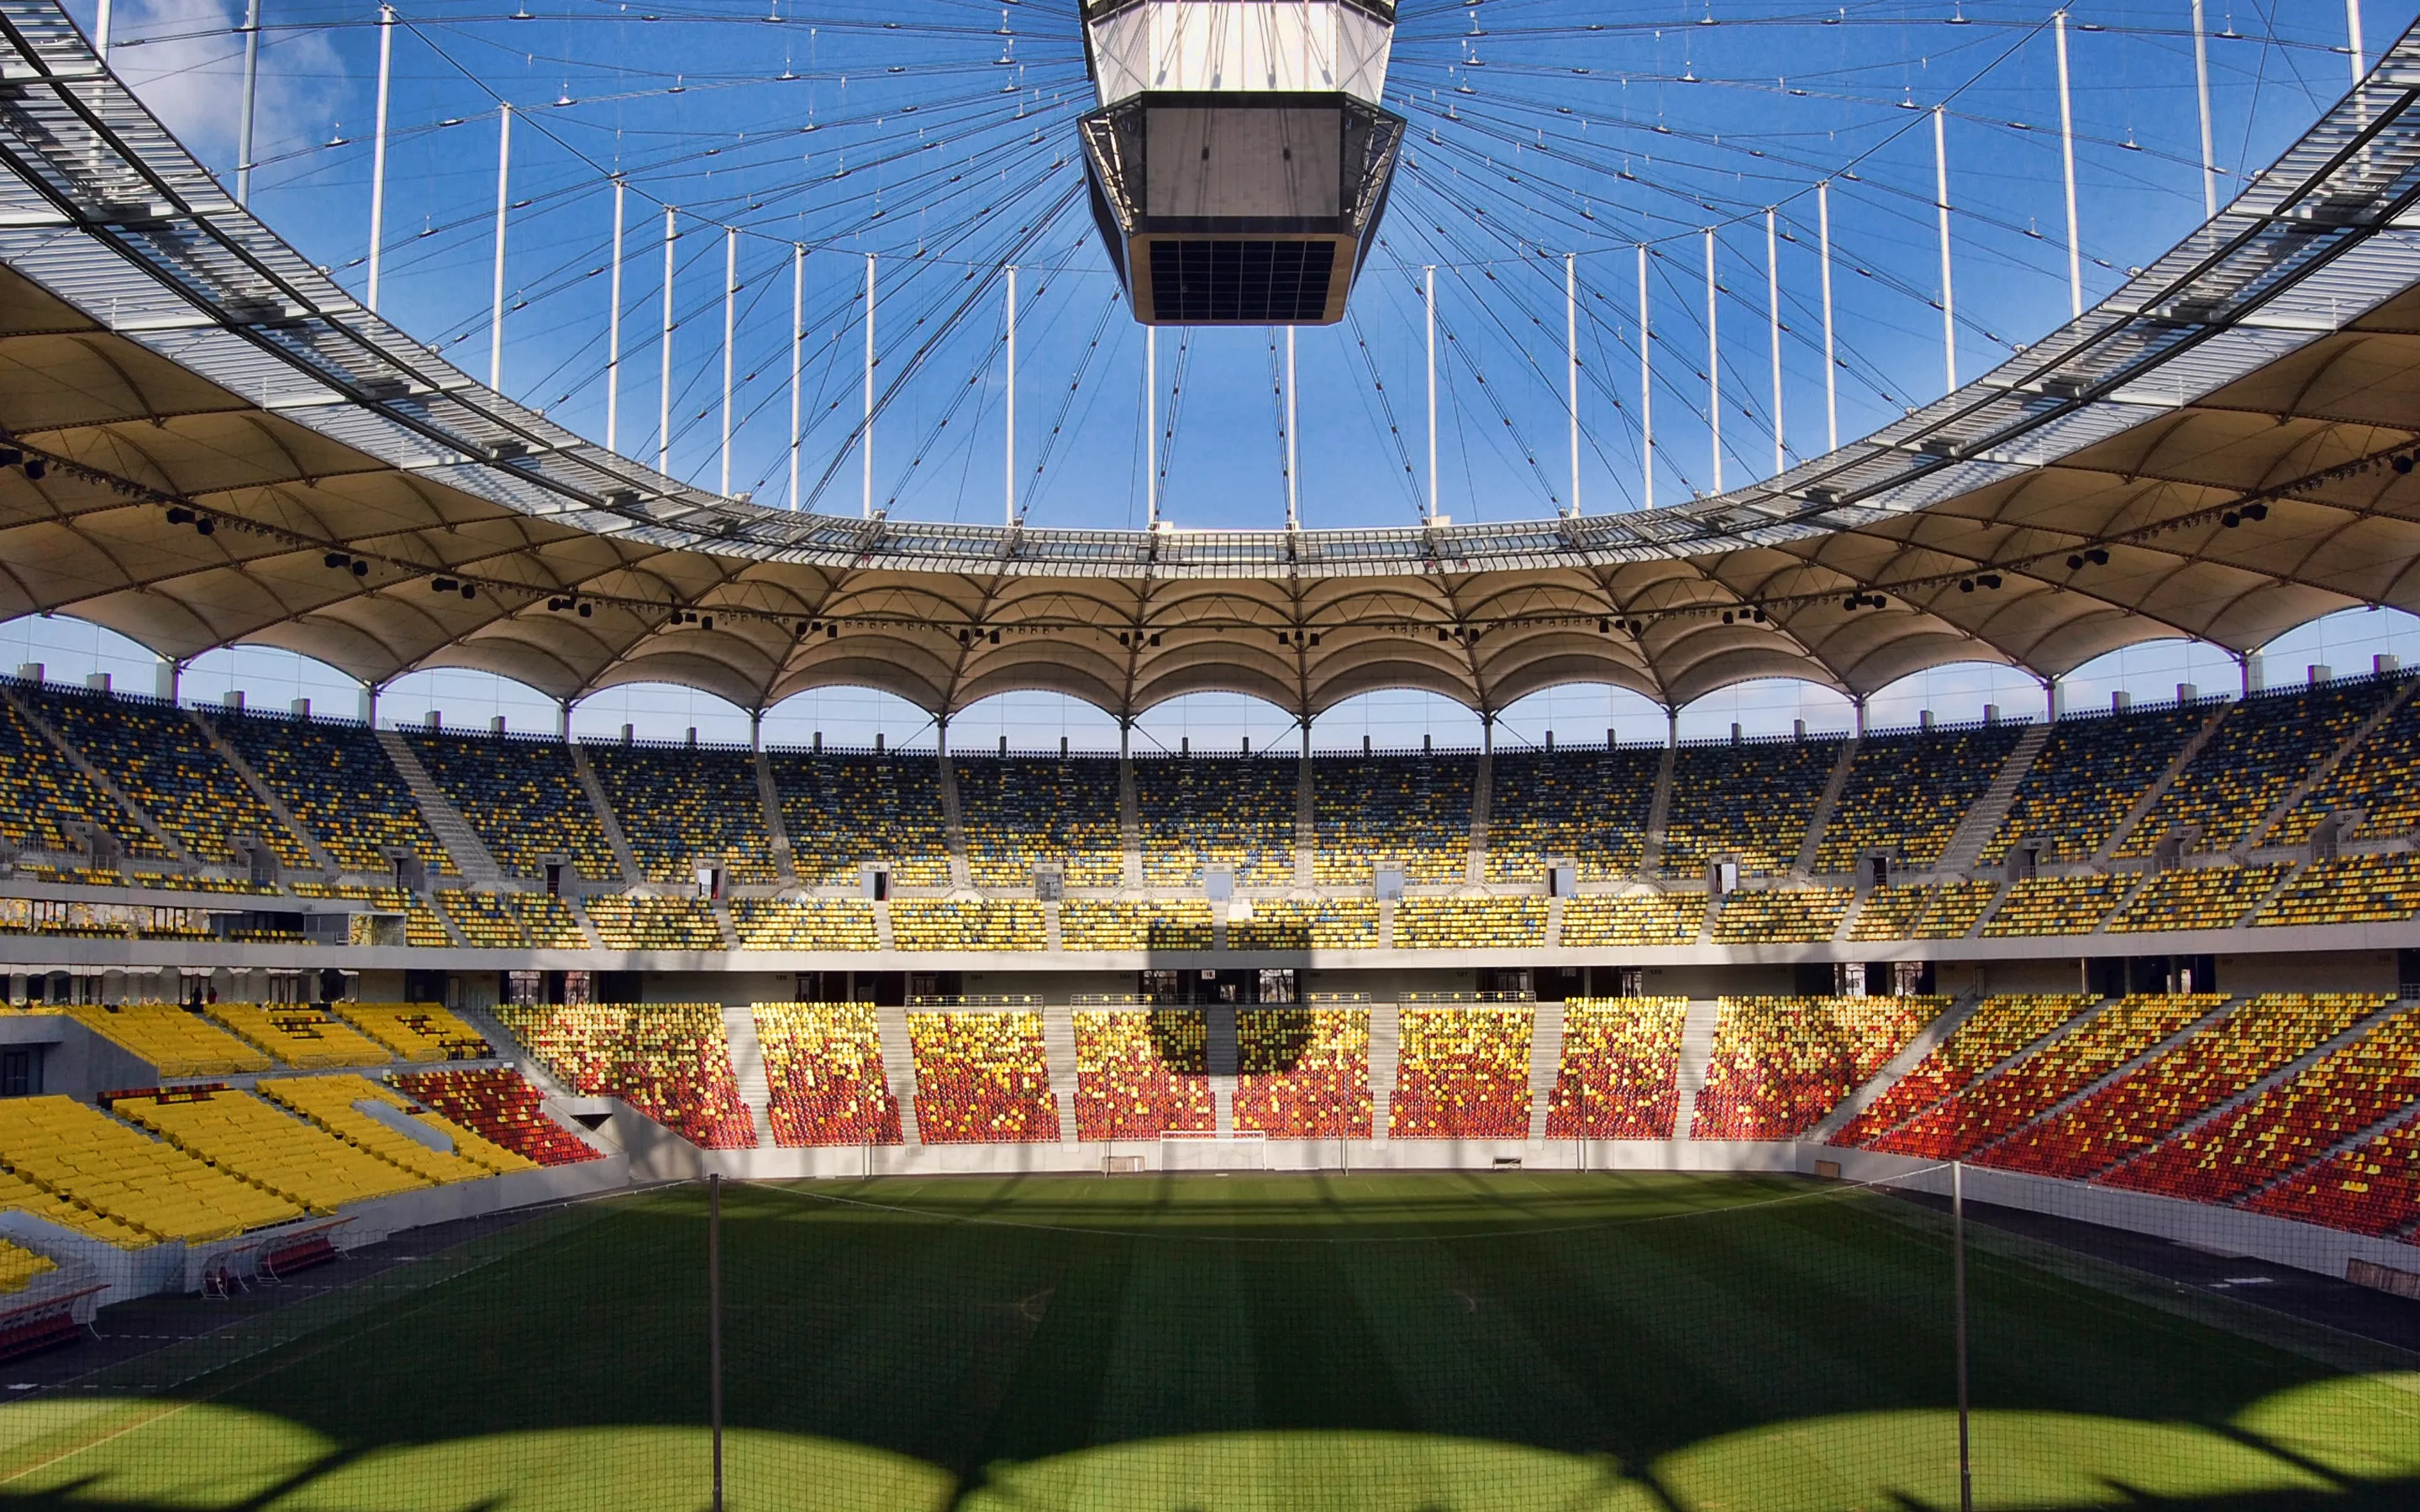 Arena Nationala in Romania, Europe | Football - Rated 4.3